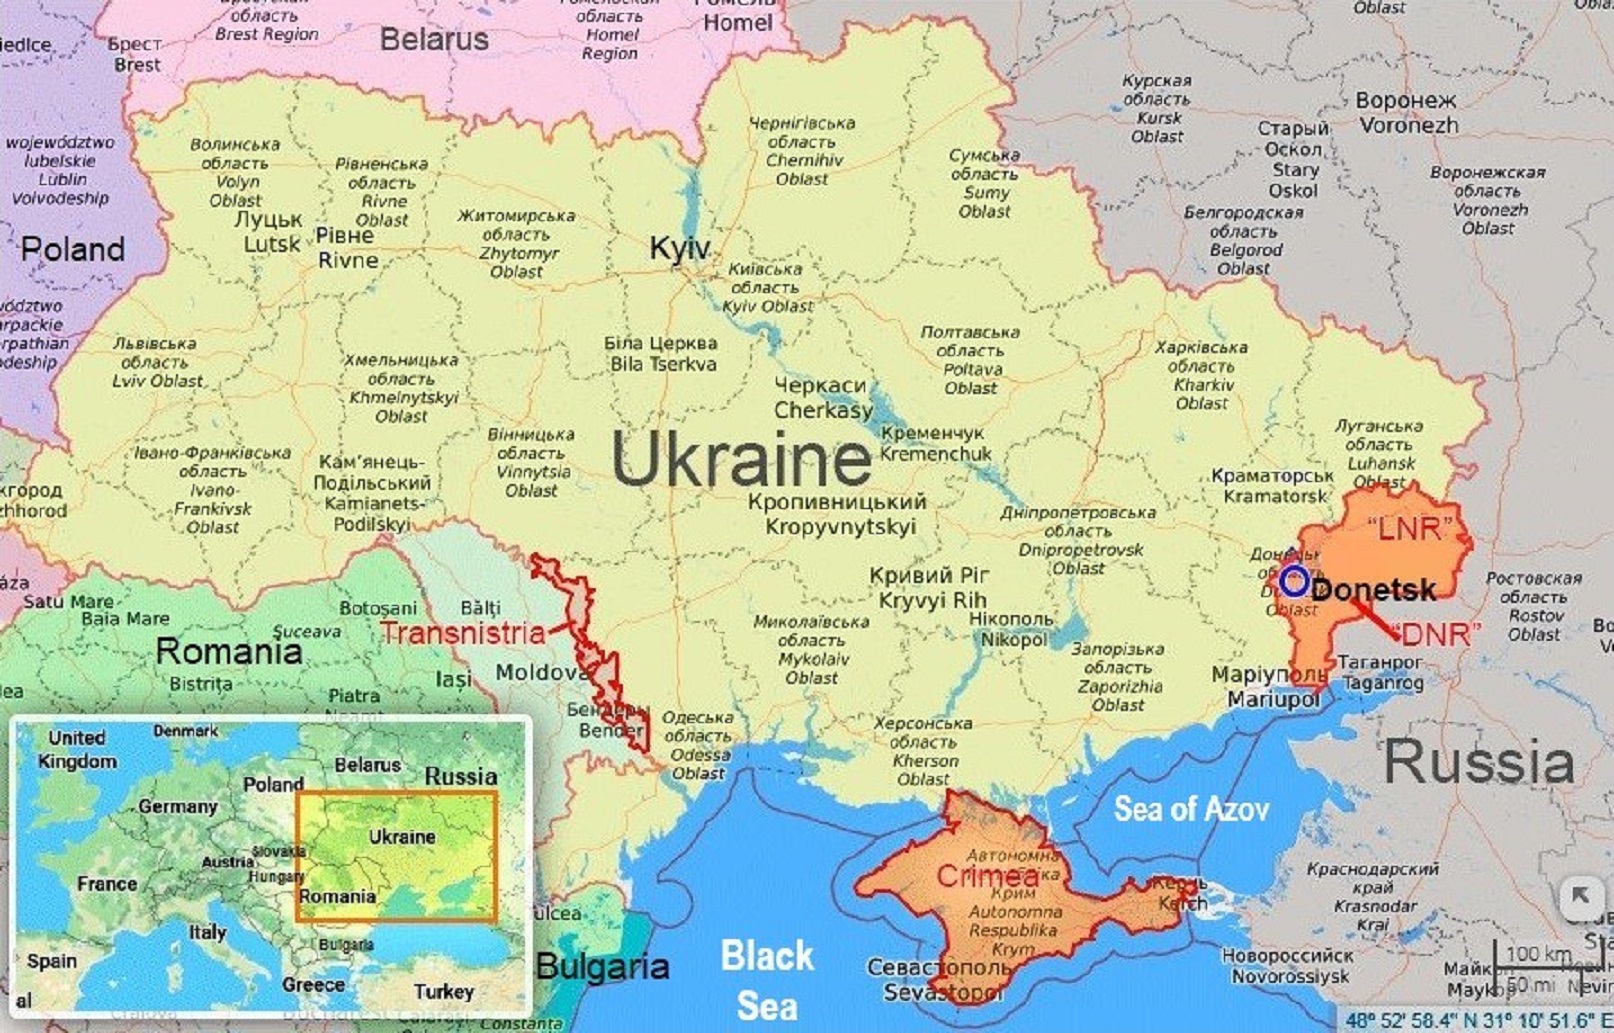 Map Of Ukraine With ORDLO Crimea And Transnistria 